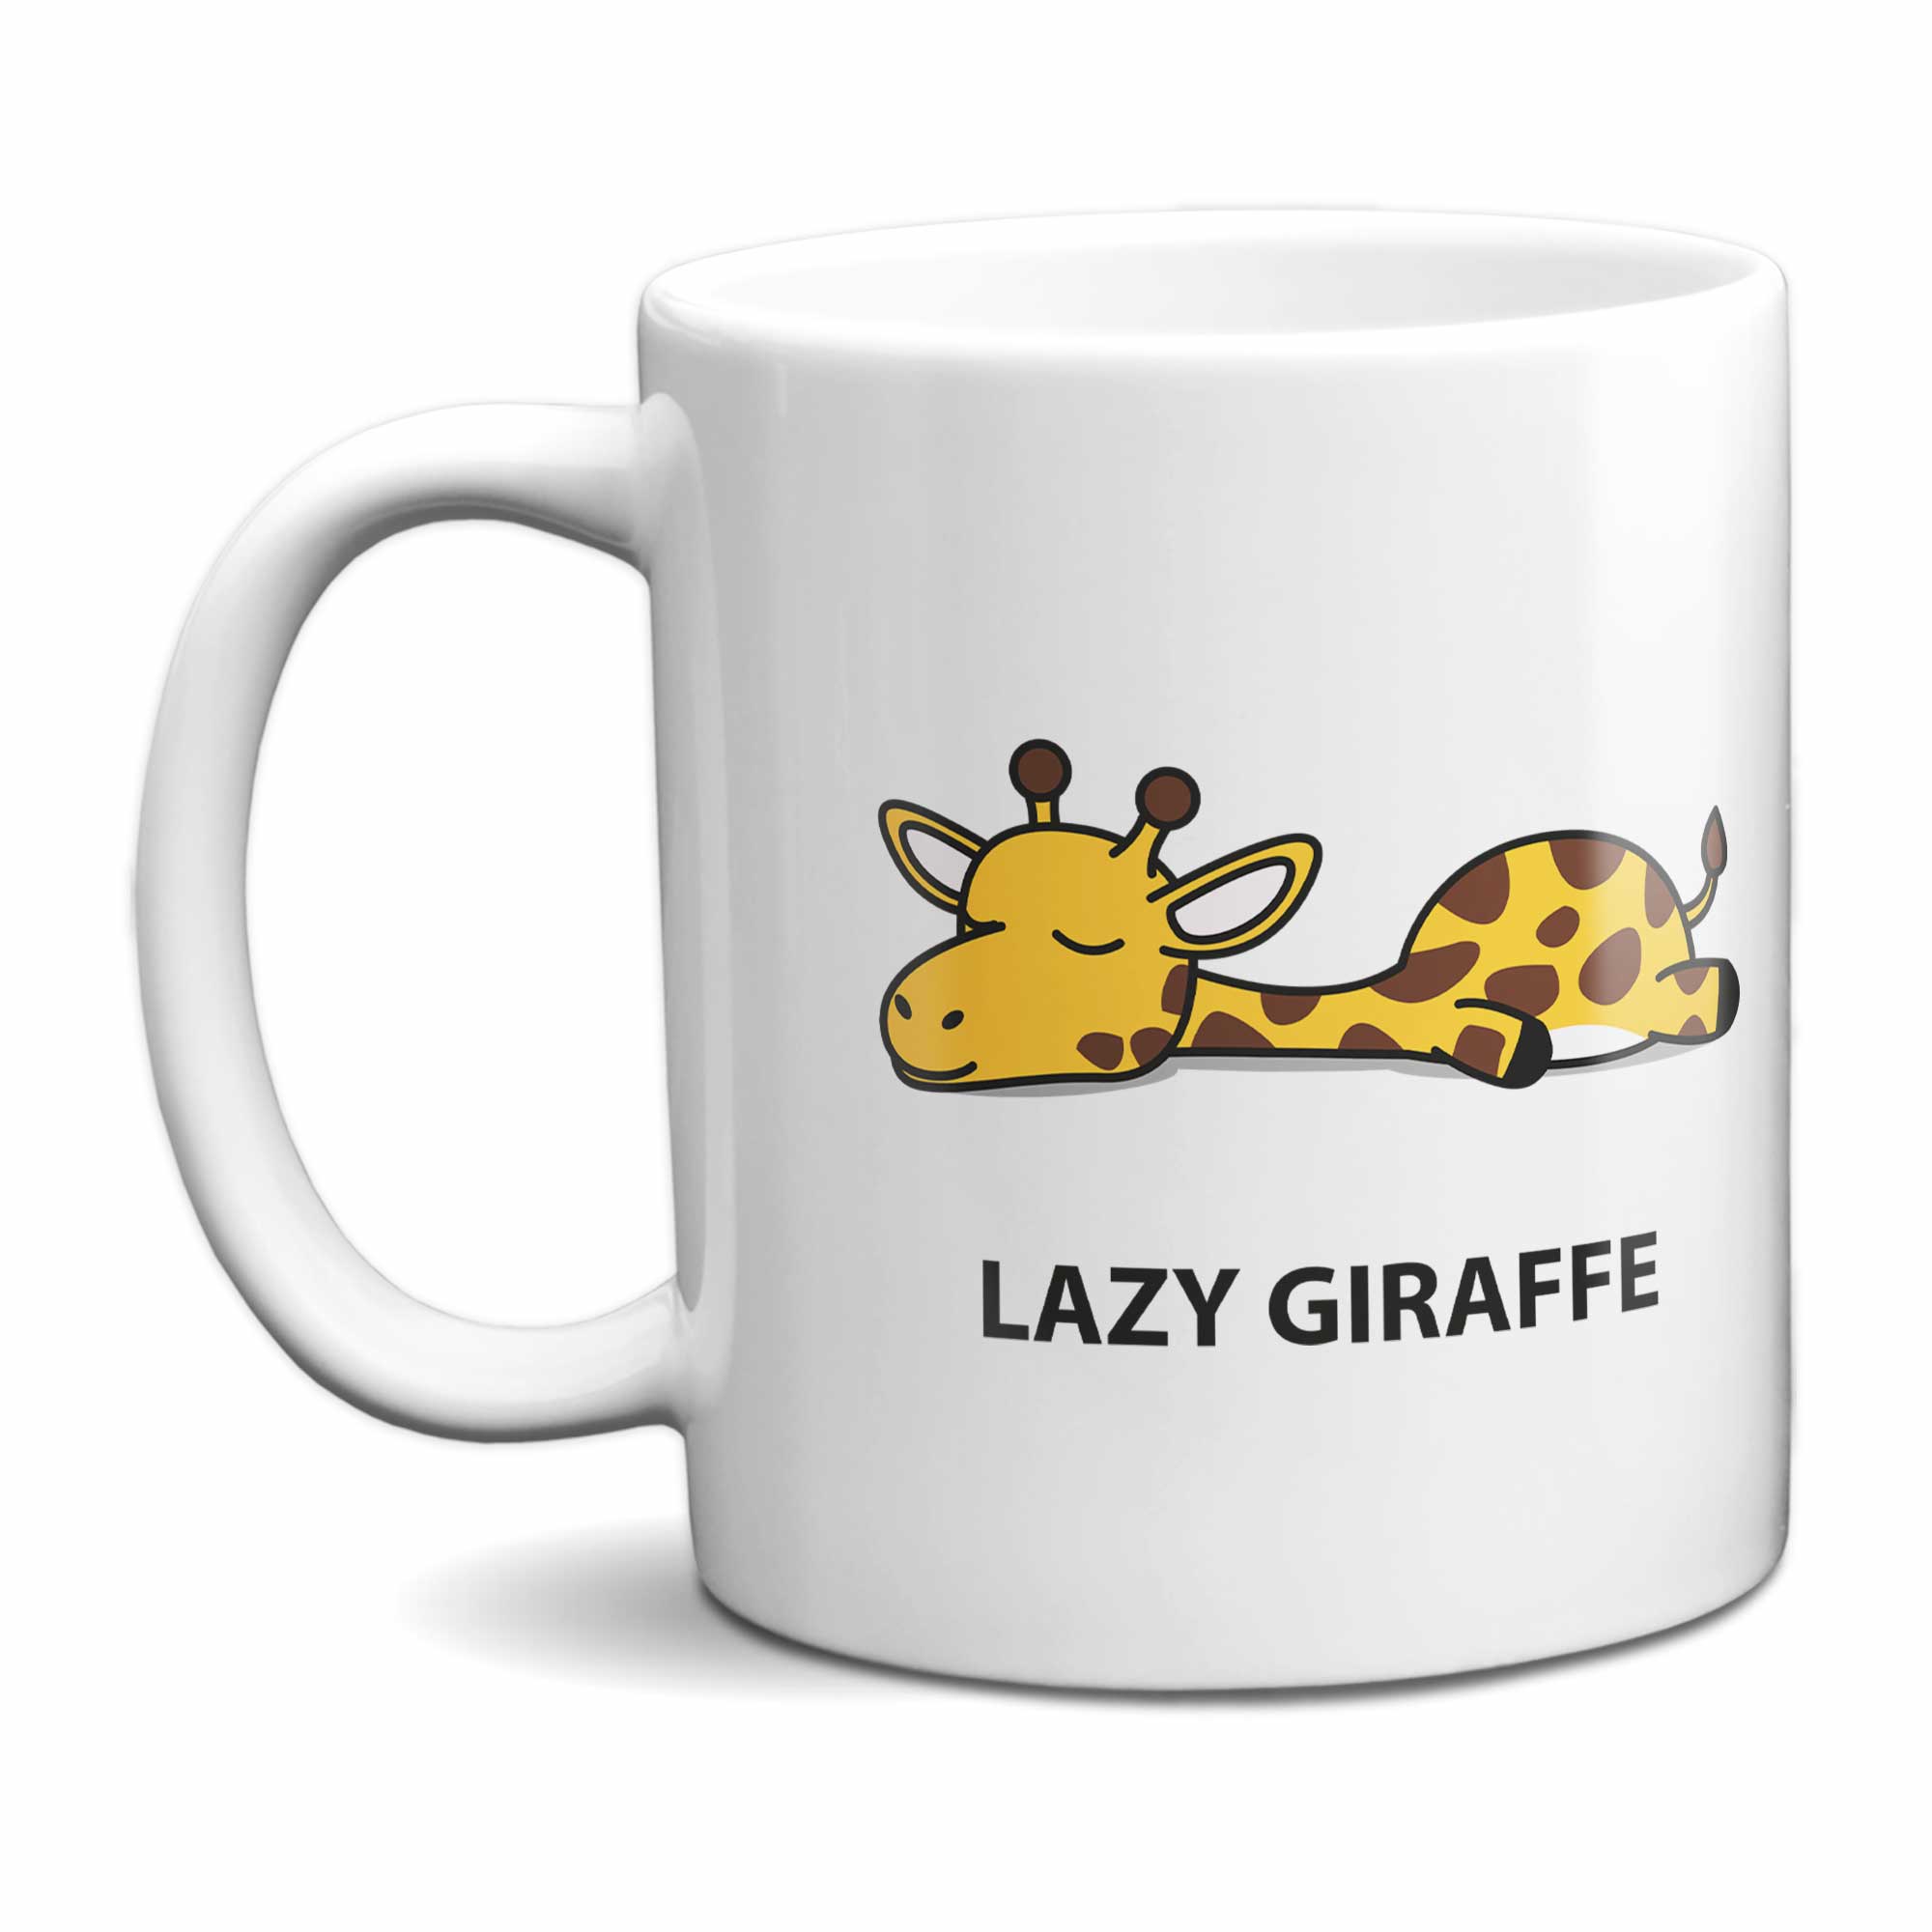 Lazy Giraffe Mug